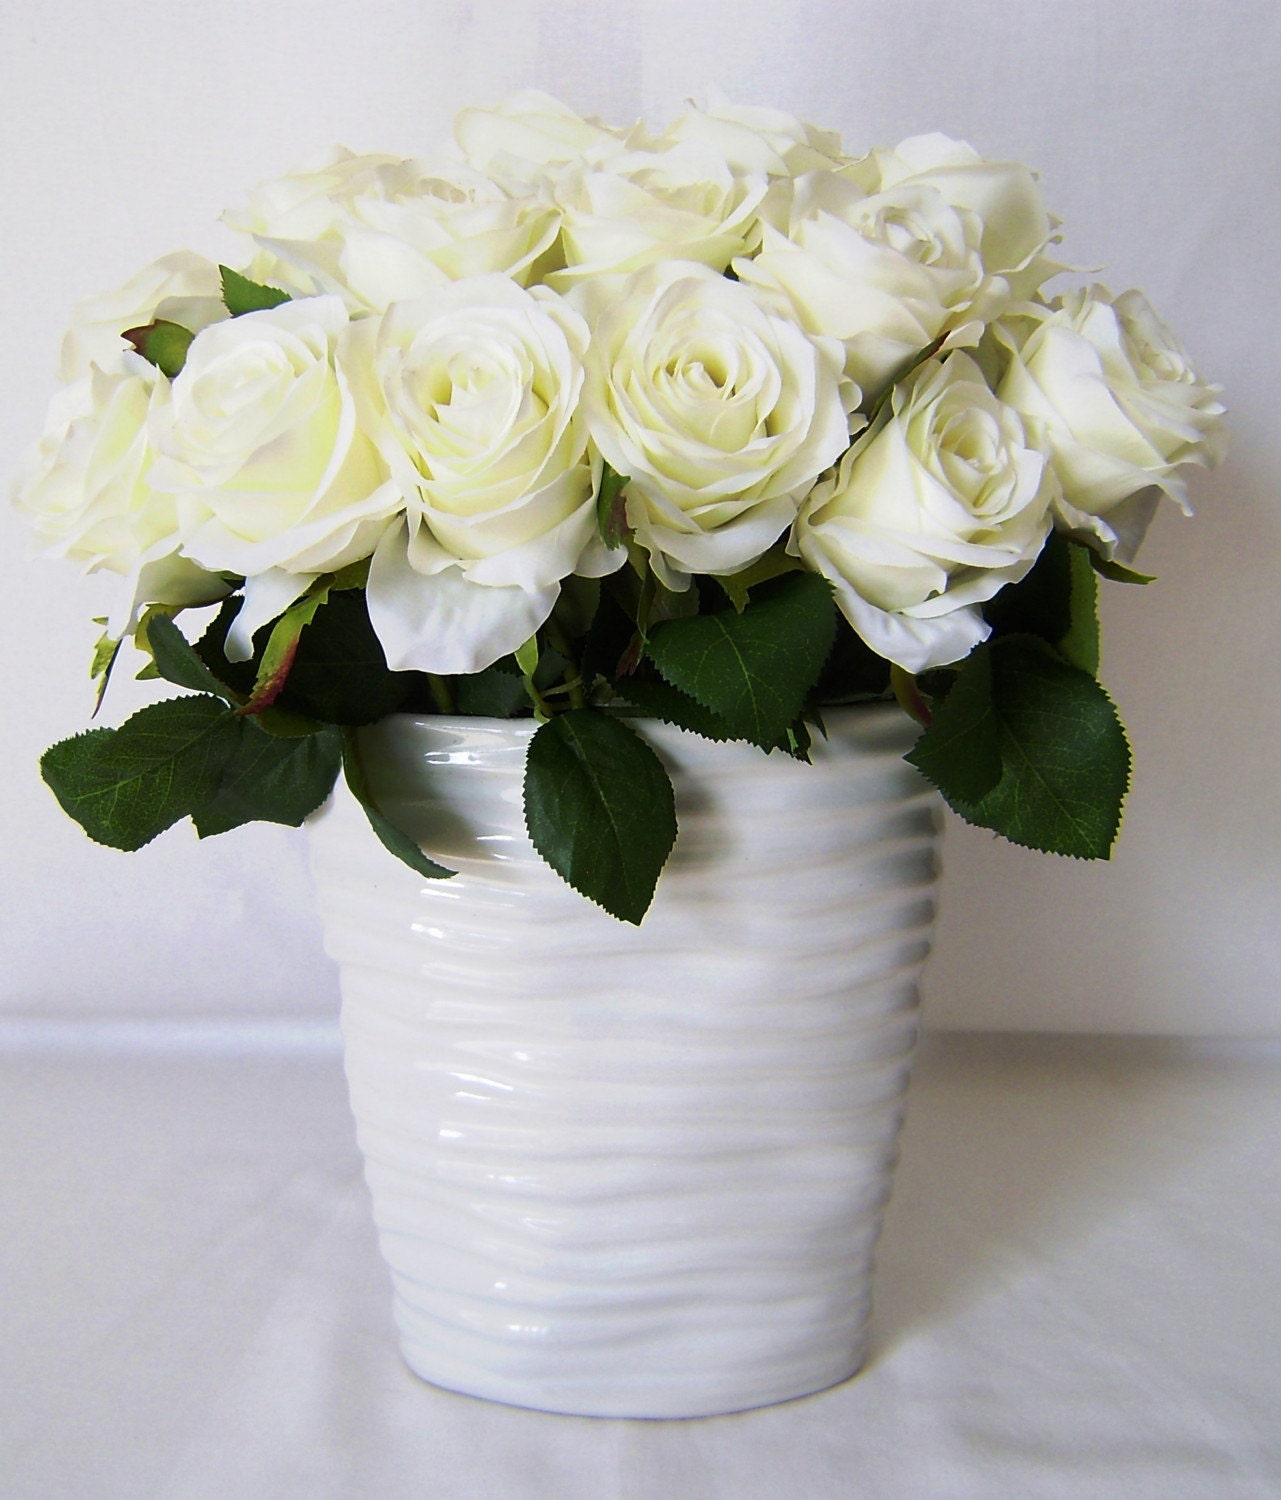 Silk Flower Arrangement - White Roses Hotel Series by MelroseFields on Etsy 